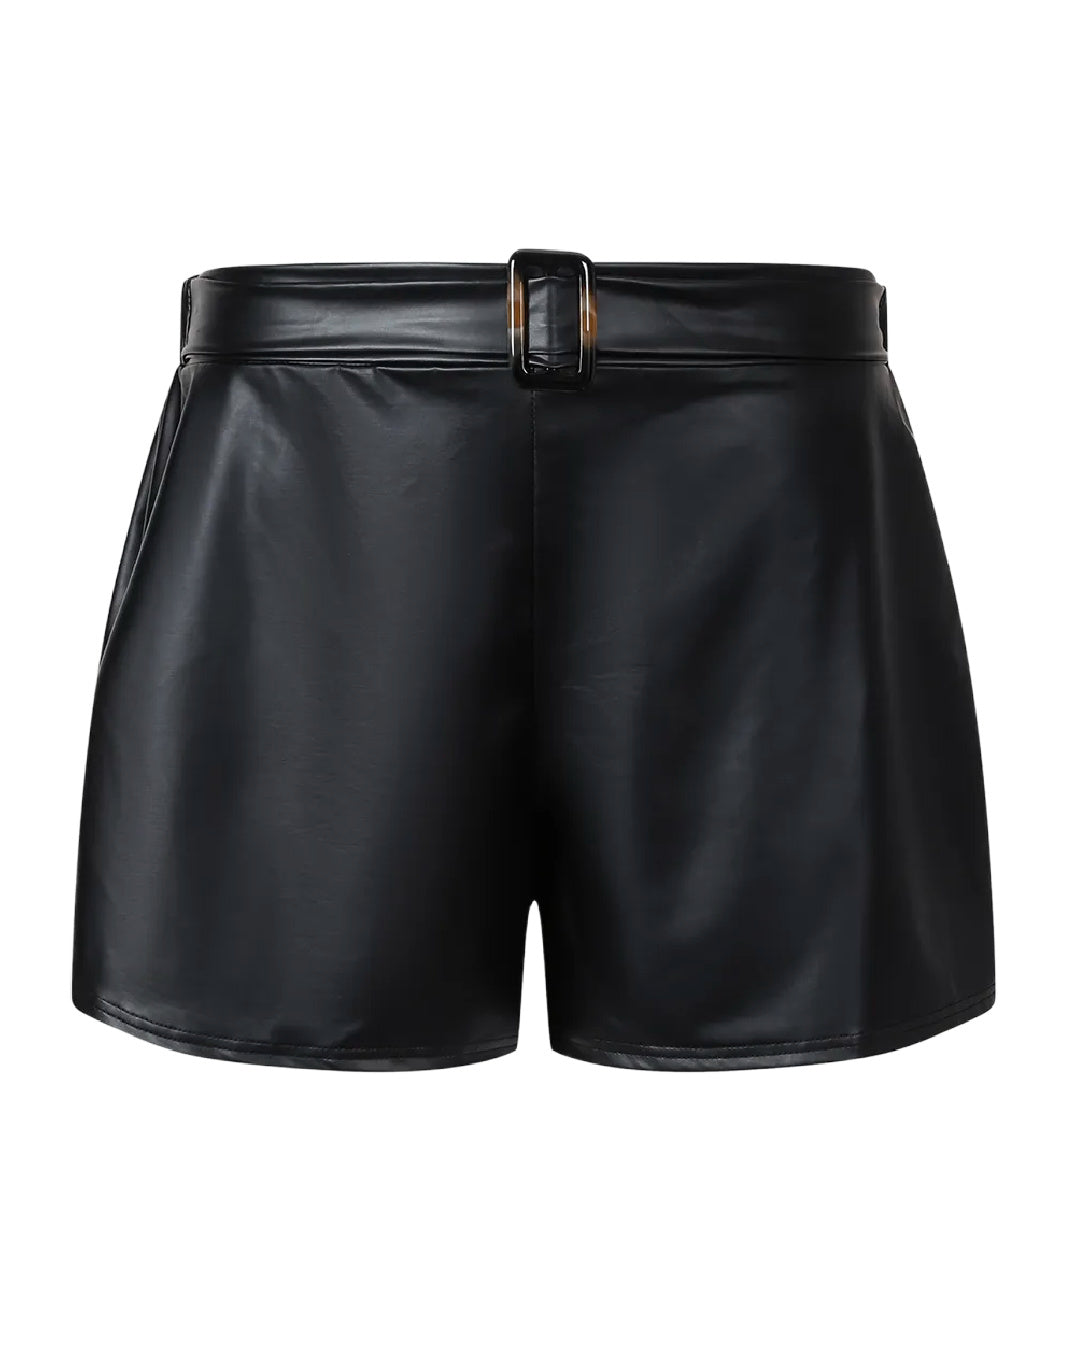 Hot- the Black Faux Leather Short Shorts Plus Sizes